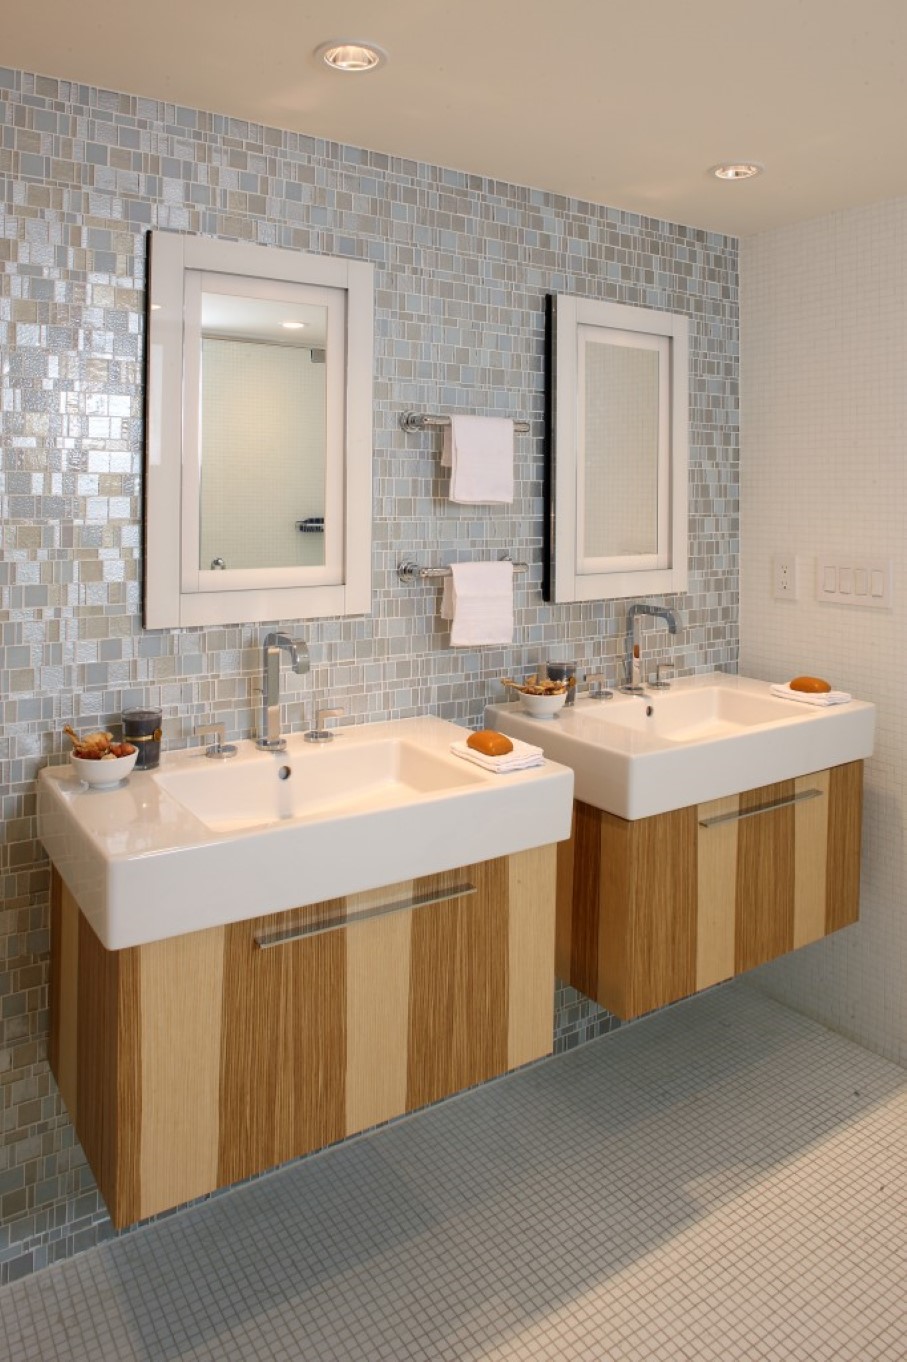 Wood Bathroom Rectangular Cute Wood Bathroom Vanity And Rectangular Framed Wall Mirror Idea Feat Captivating Backsplash Design Bathroom  Taking An Inspiration From Small Space For Splendid Floating Bathroom Vanity 